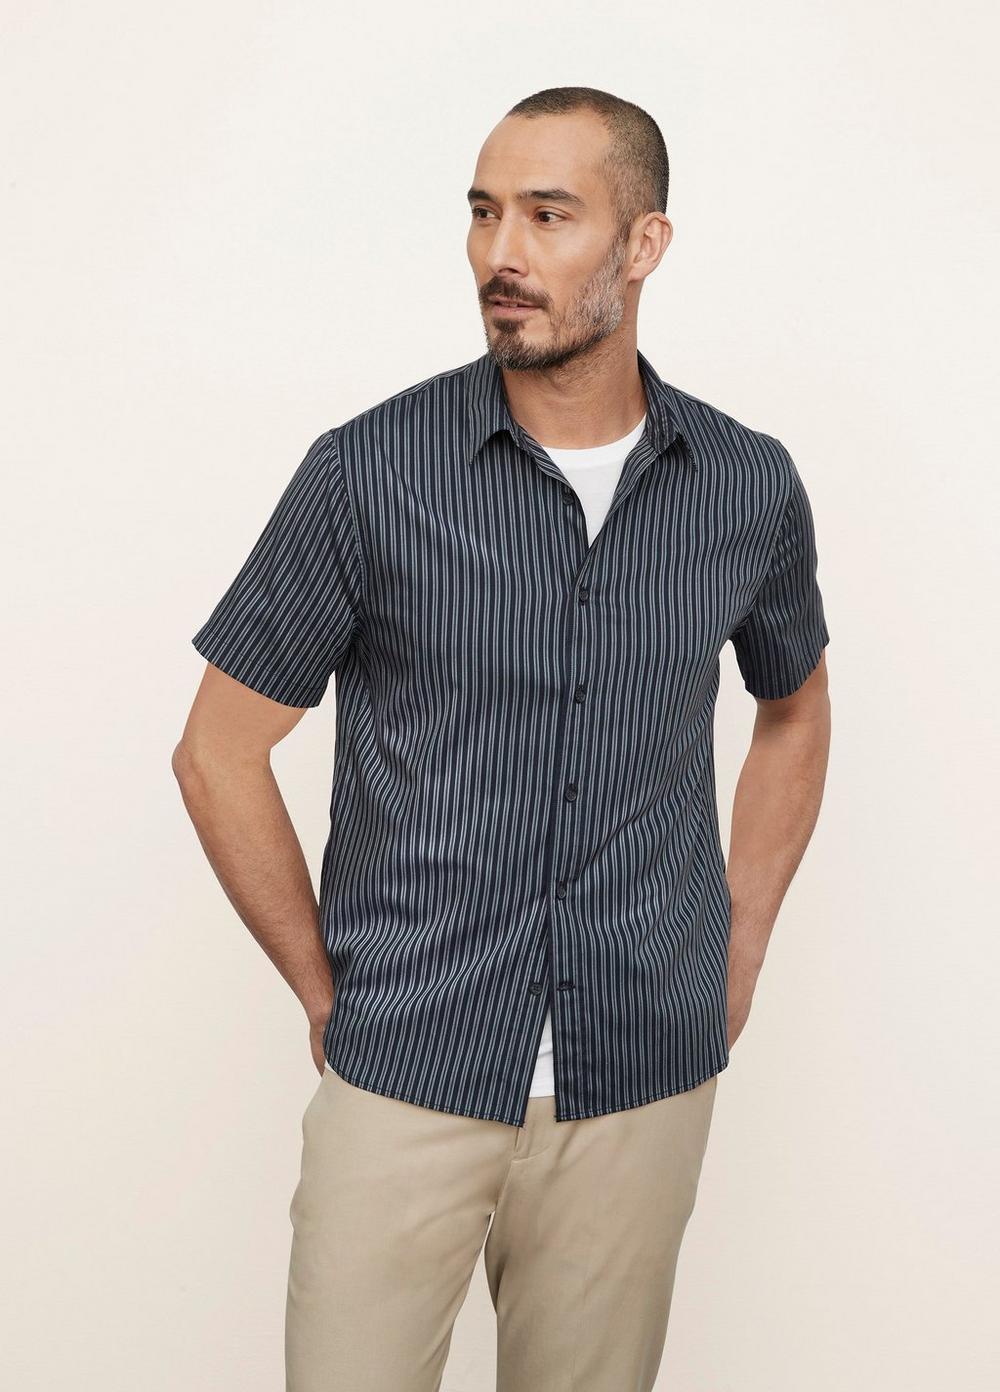 Claremont Stripe Short Sleeve Shirt